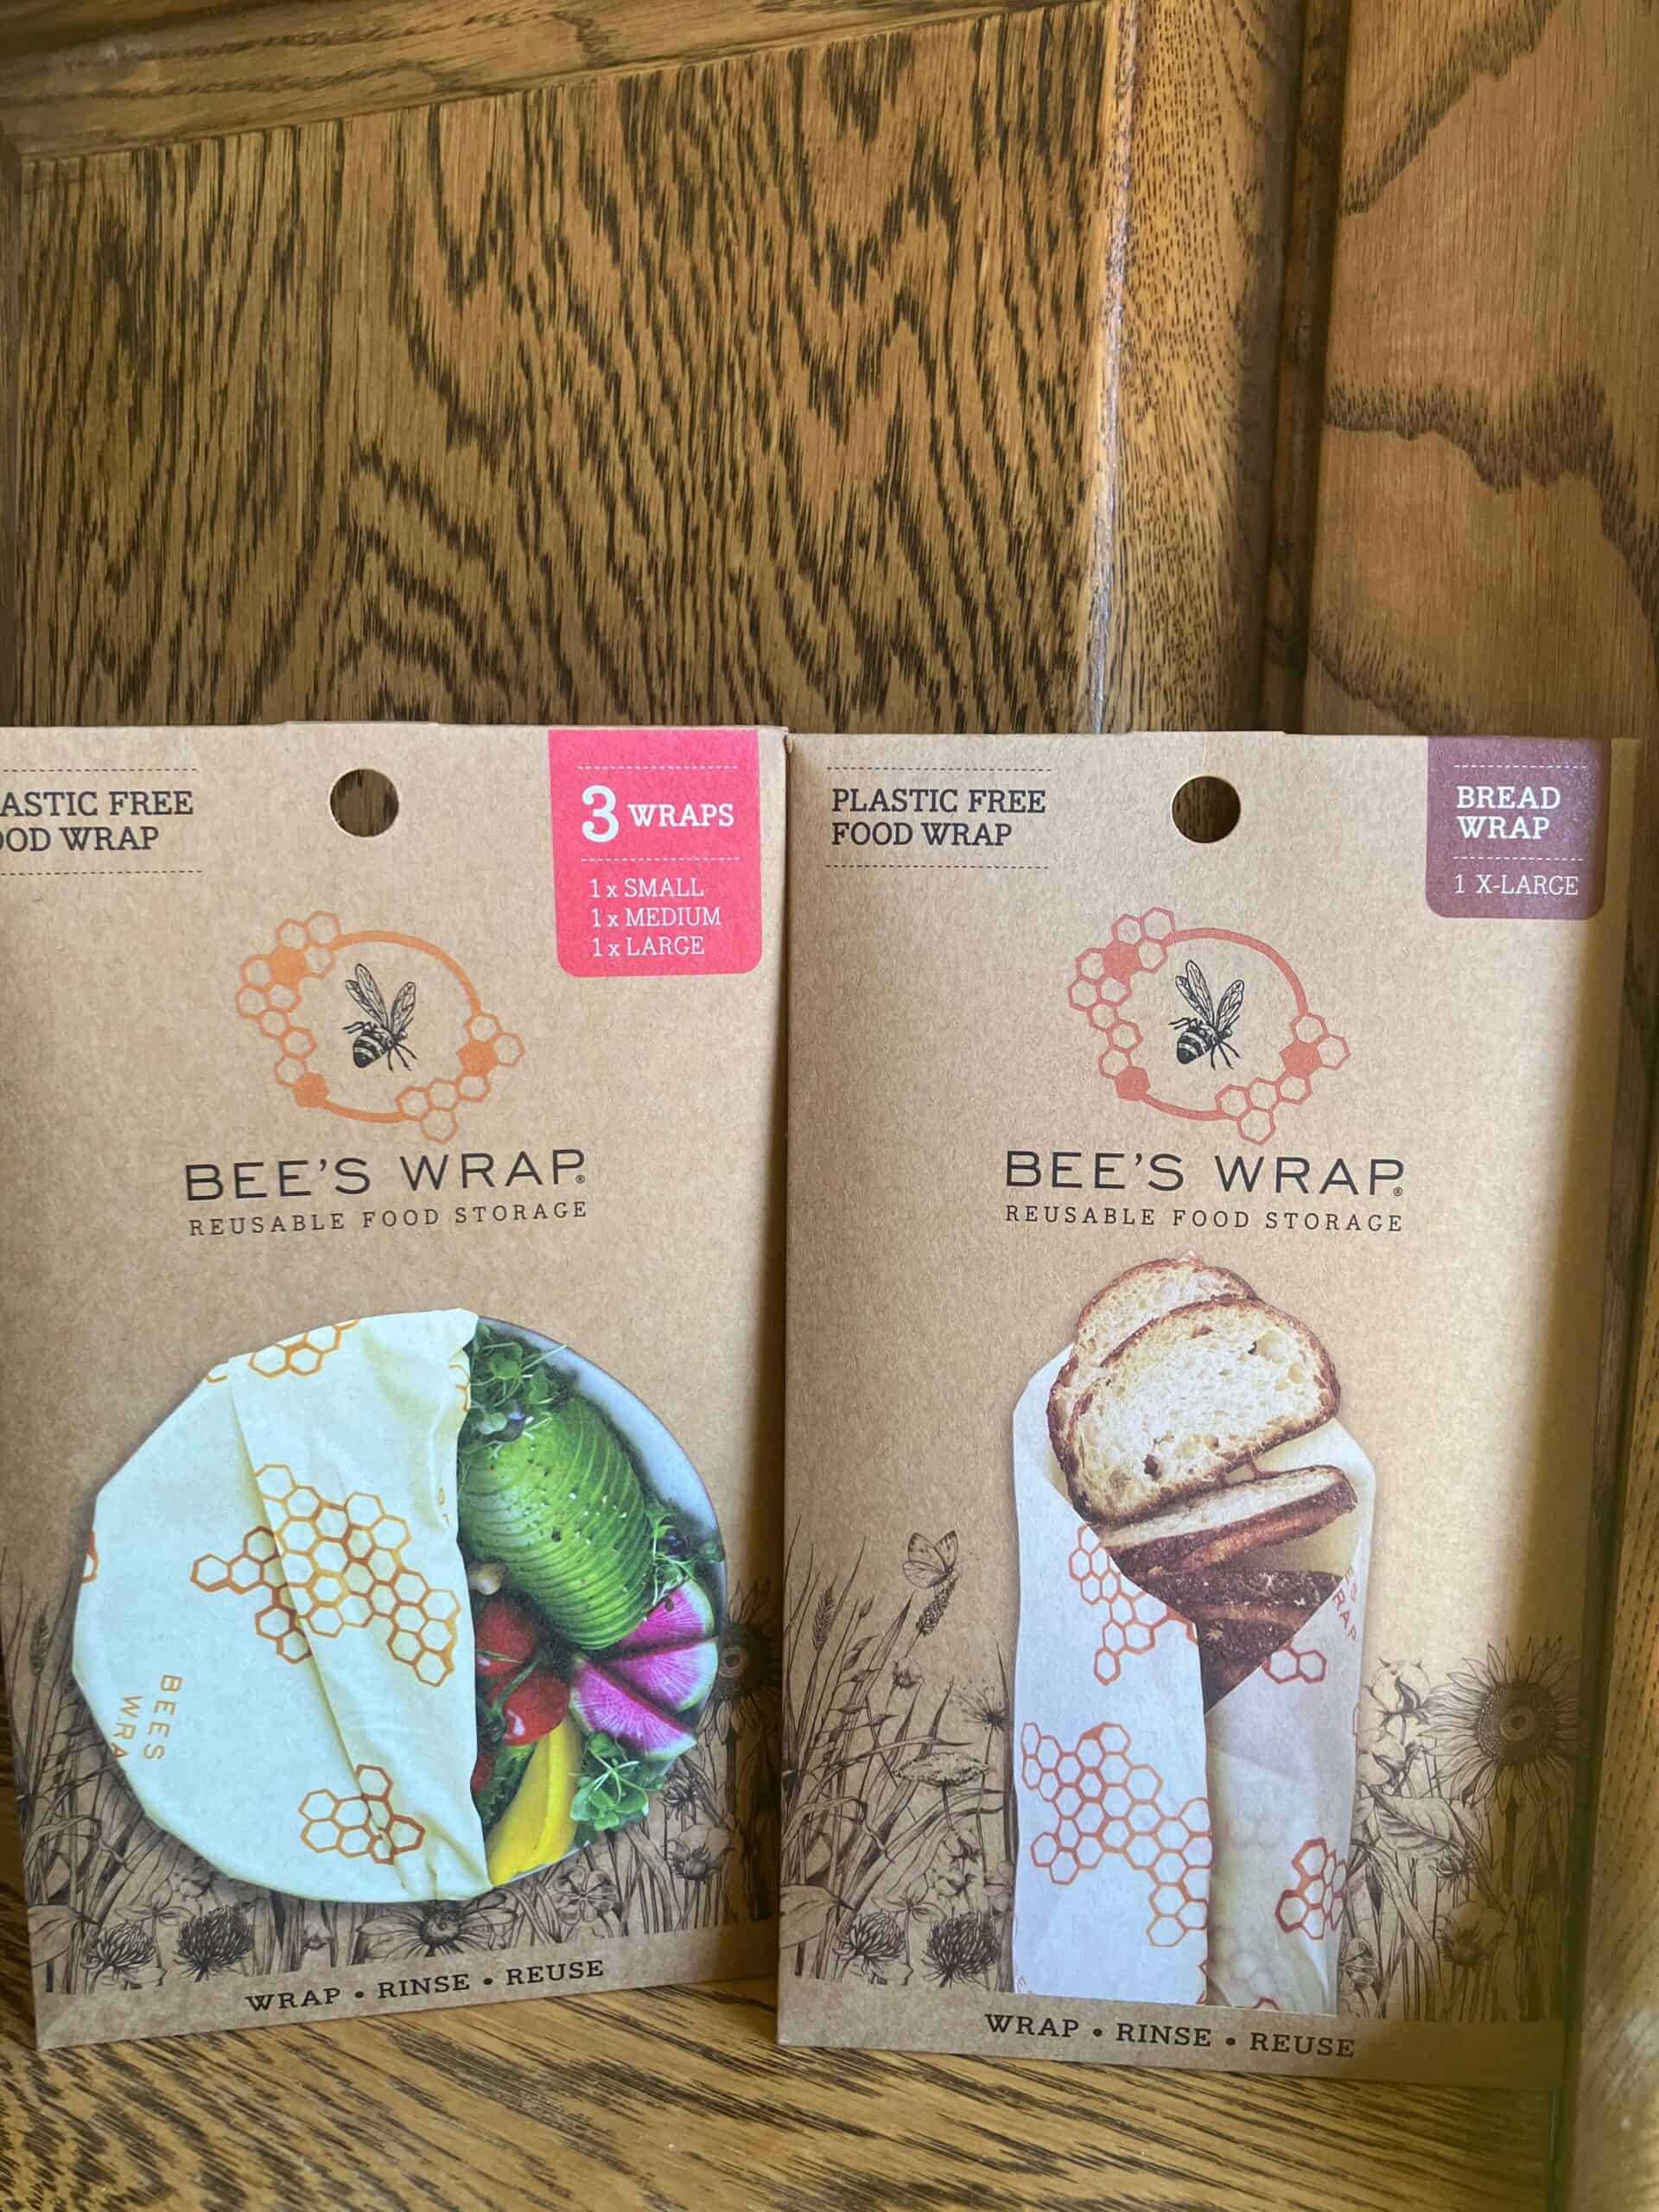 Beeswax wraps in original packaging